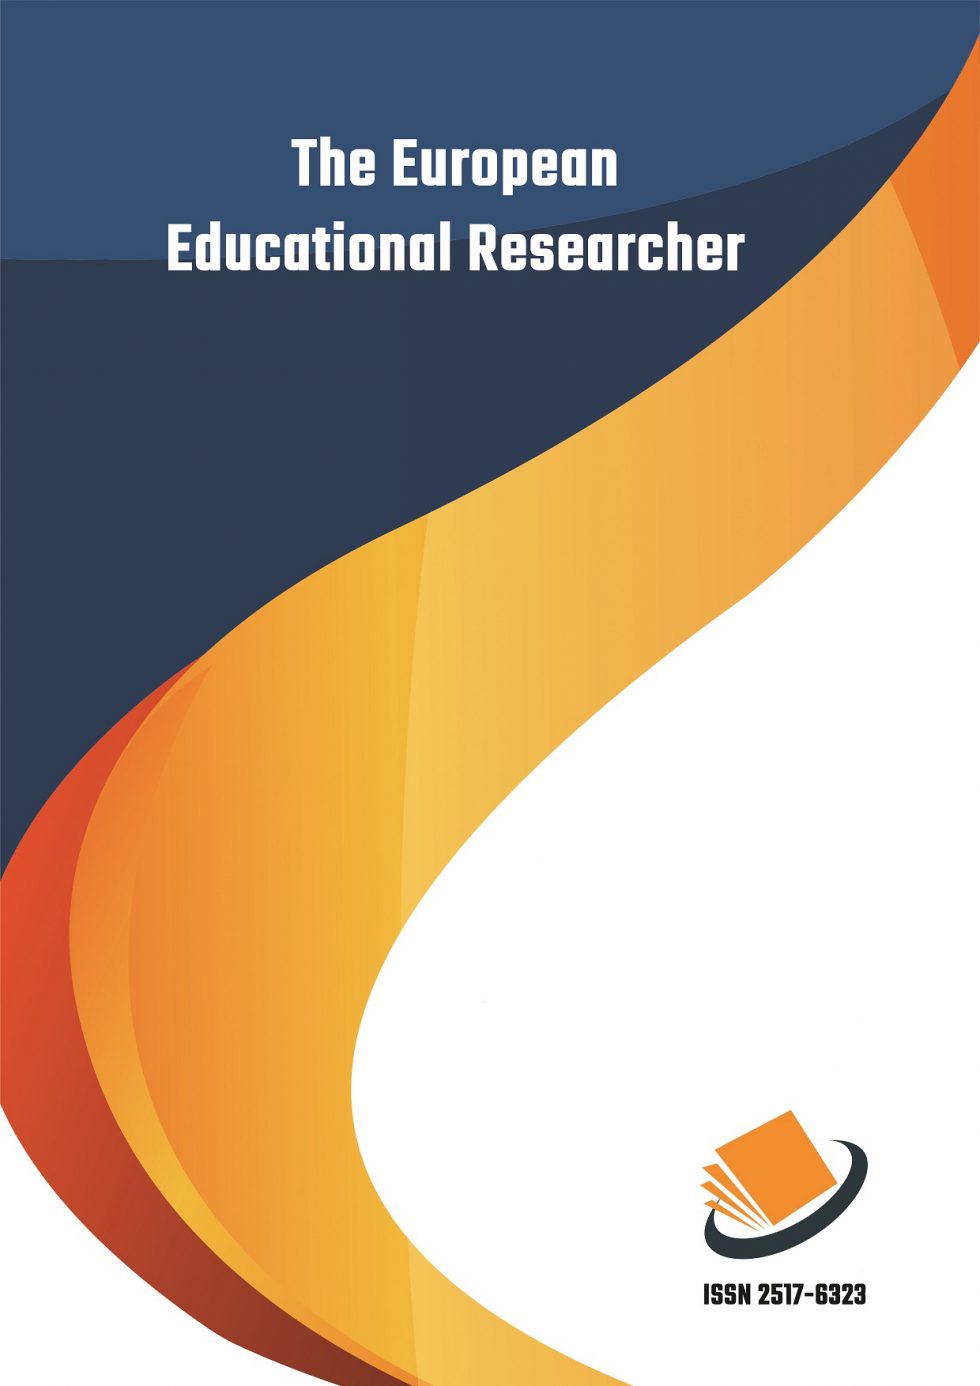 The European Educational Researcher